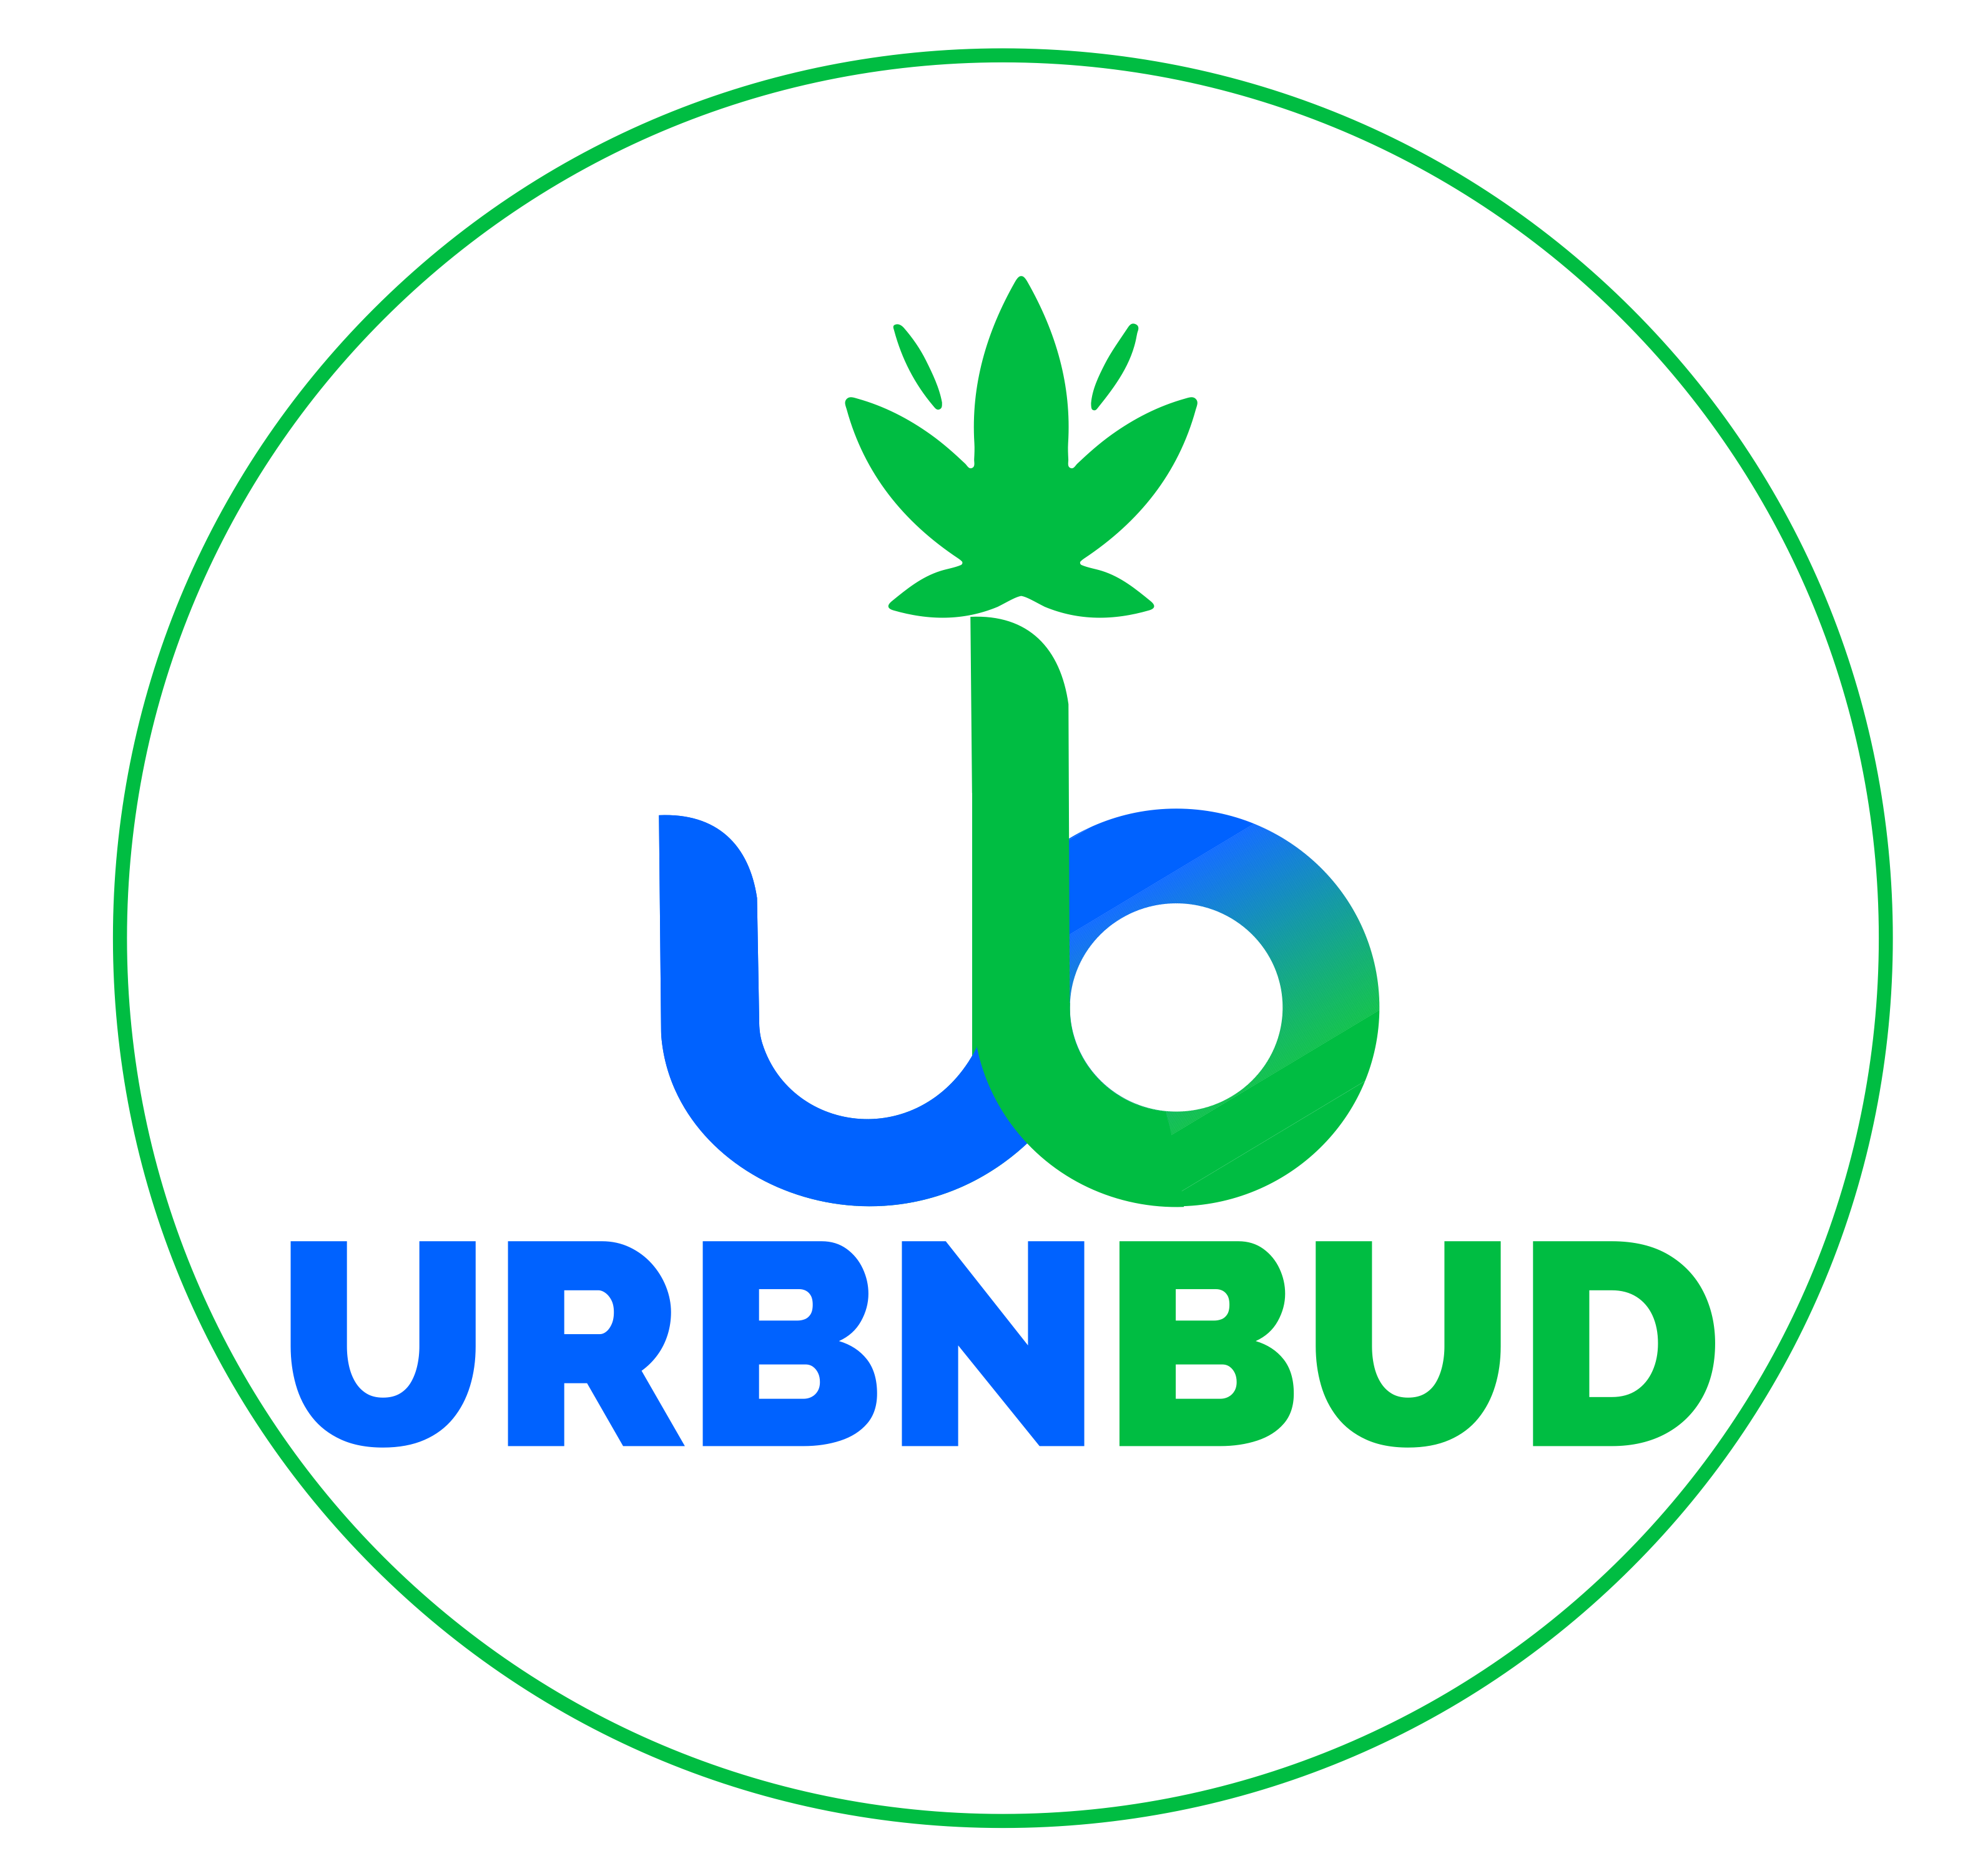 URBNBUD - Craft Cannabis Lives Here